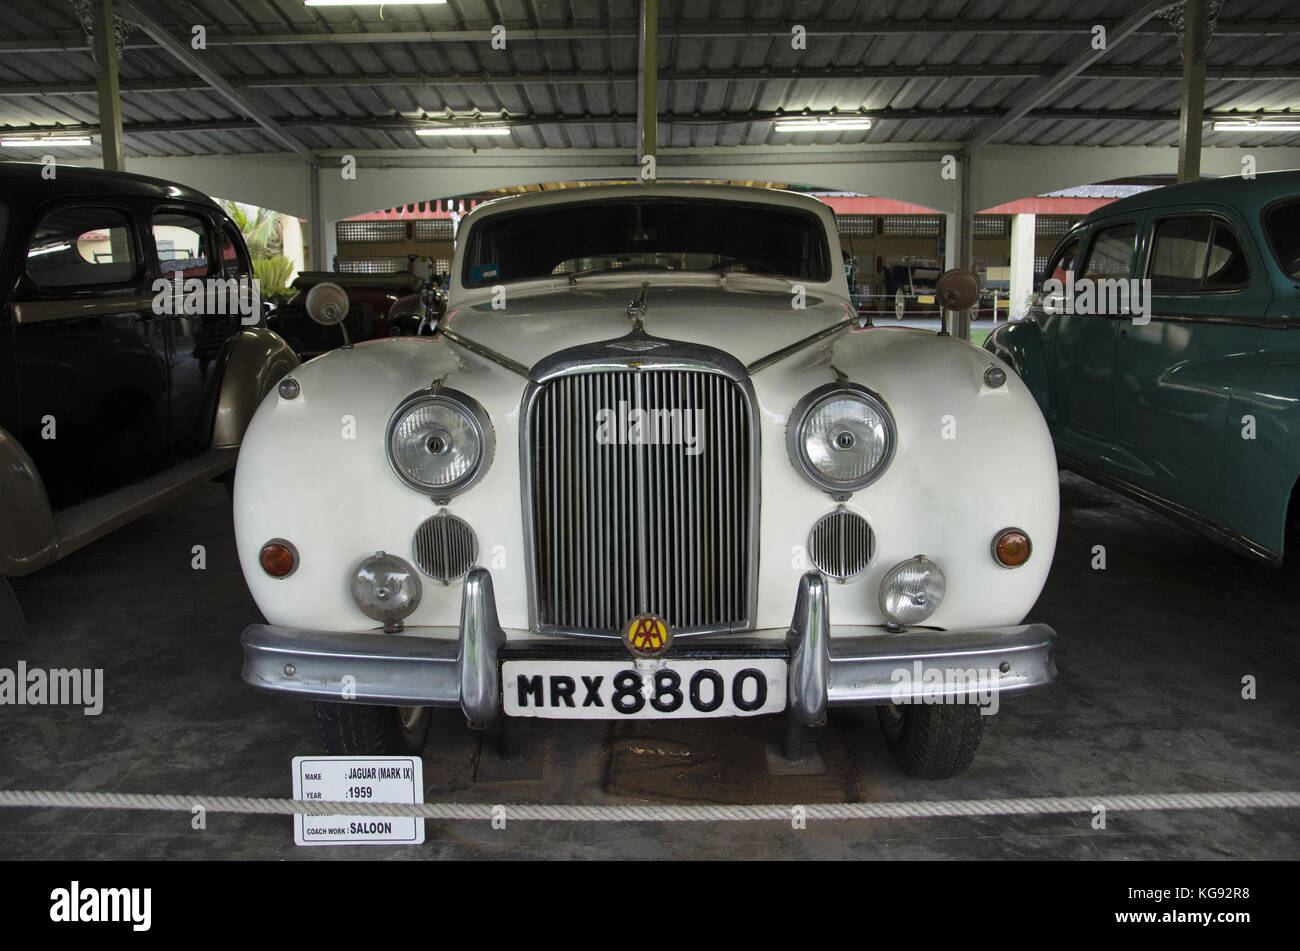 Jaguar Mark IX (Year 1959), Coach work - saloon, England Auto world vintage car museum, Ahmedabad, Gujarat, India Stock Photo